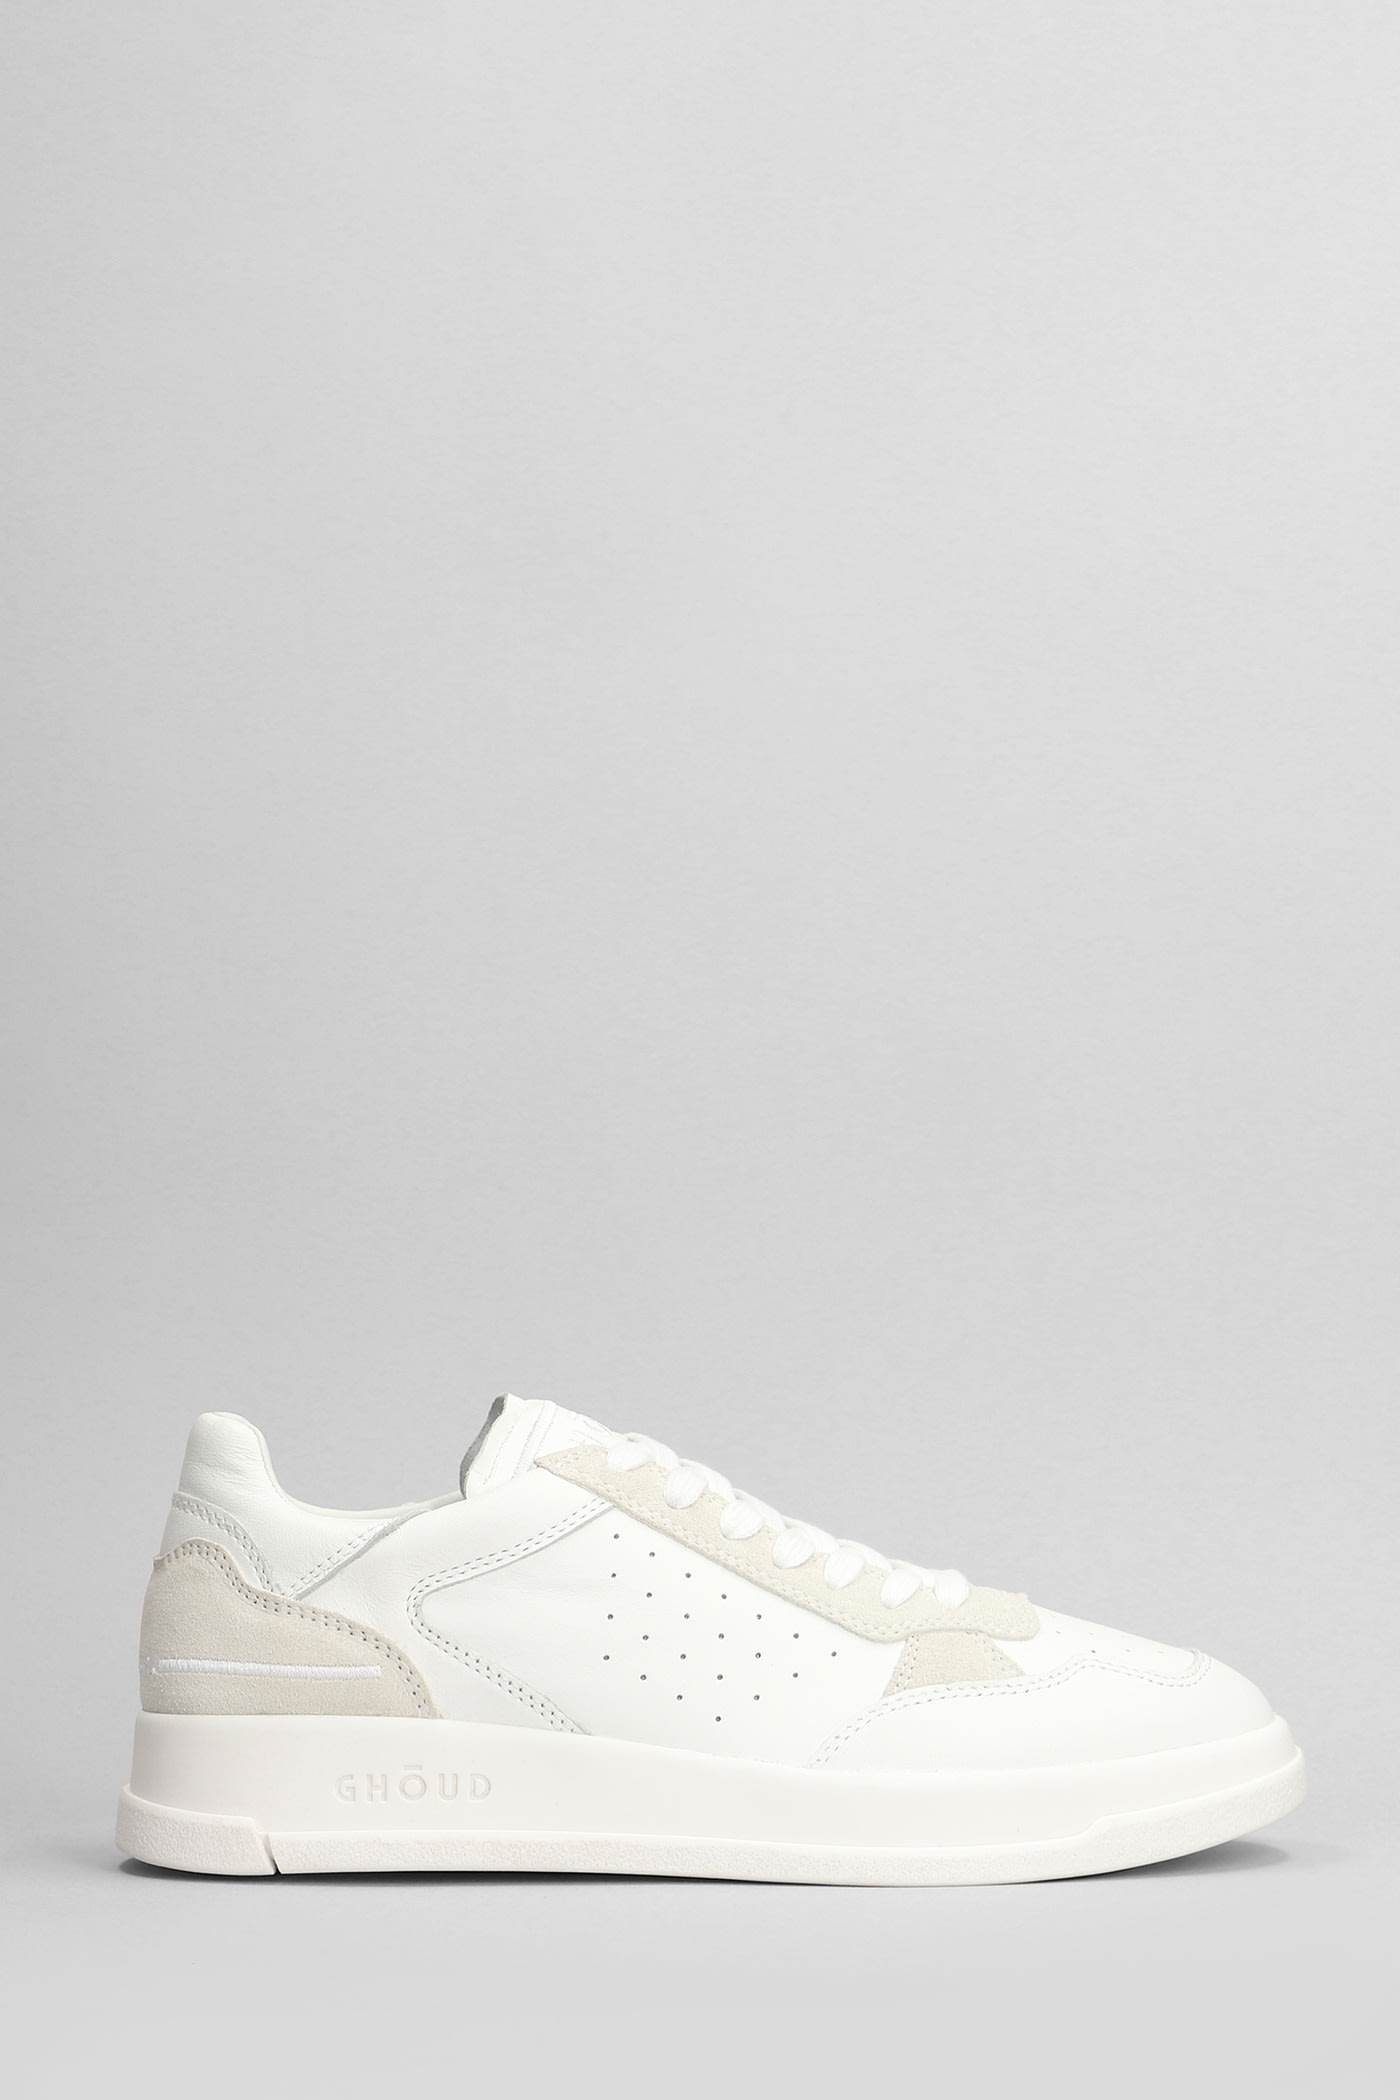 Shop Ghoud Tweener Low Sneakers In White Suede And Leather